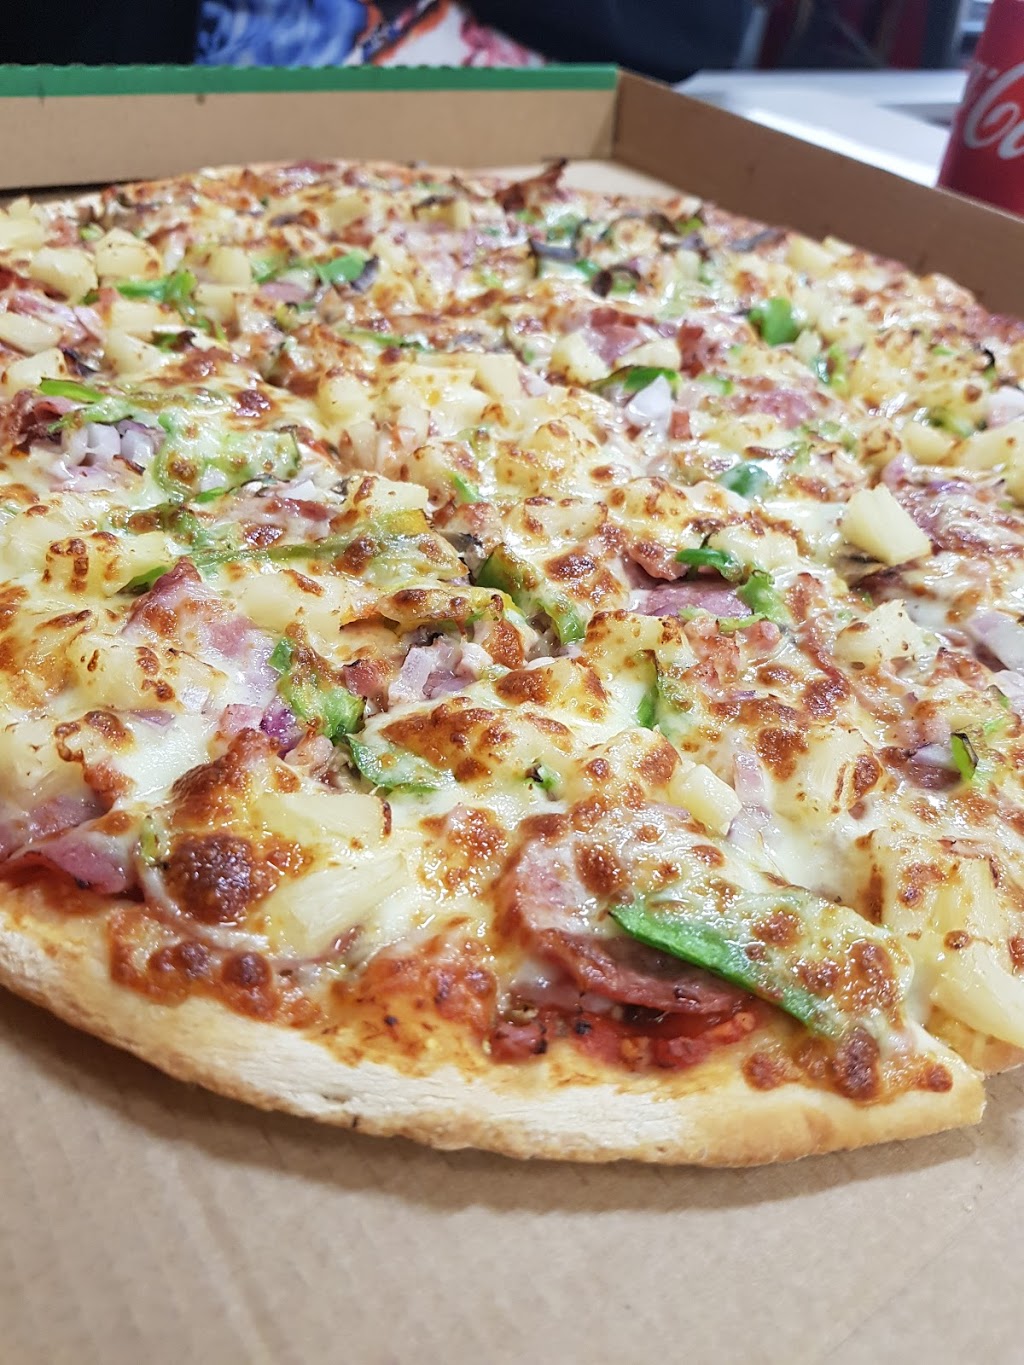 Pedros Pizza (Somerton Park) | meal delivery | 71 Oaklands Rd, Somerton Park SA 5044, Australia | 0882953011 OR +61 8 8295 3011